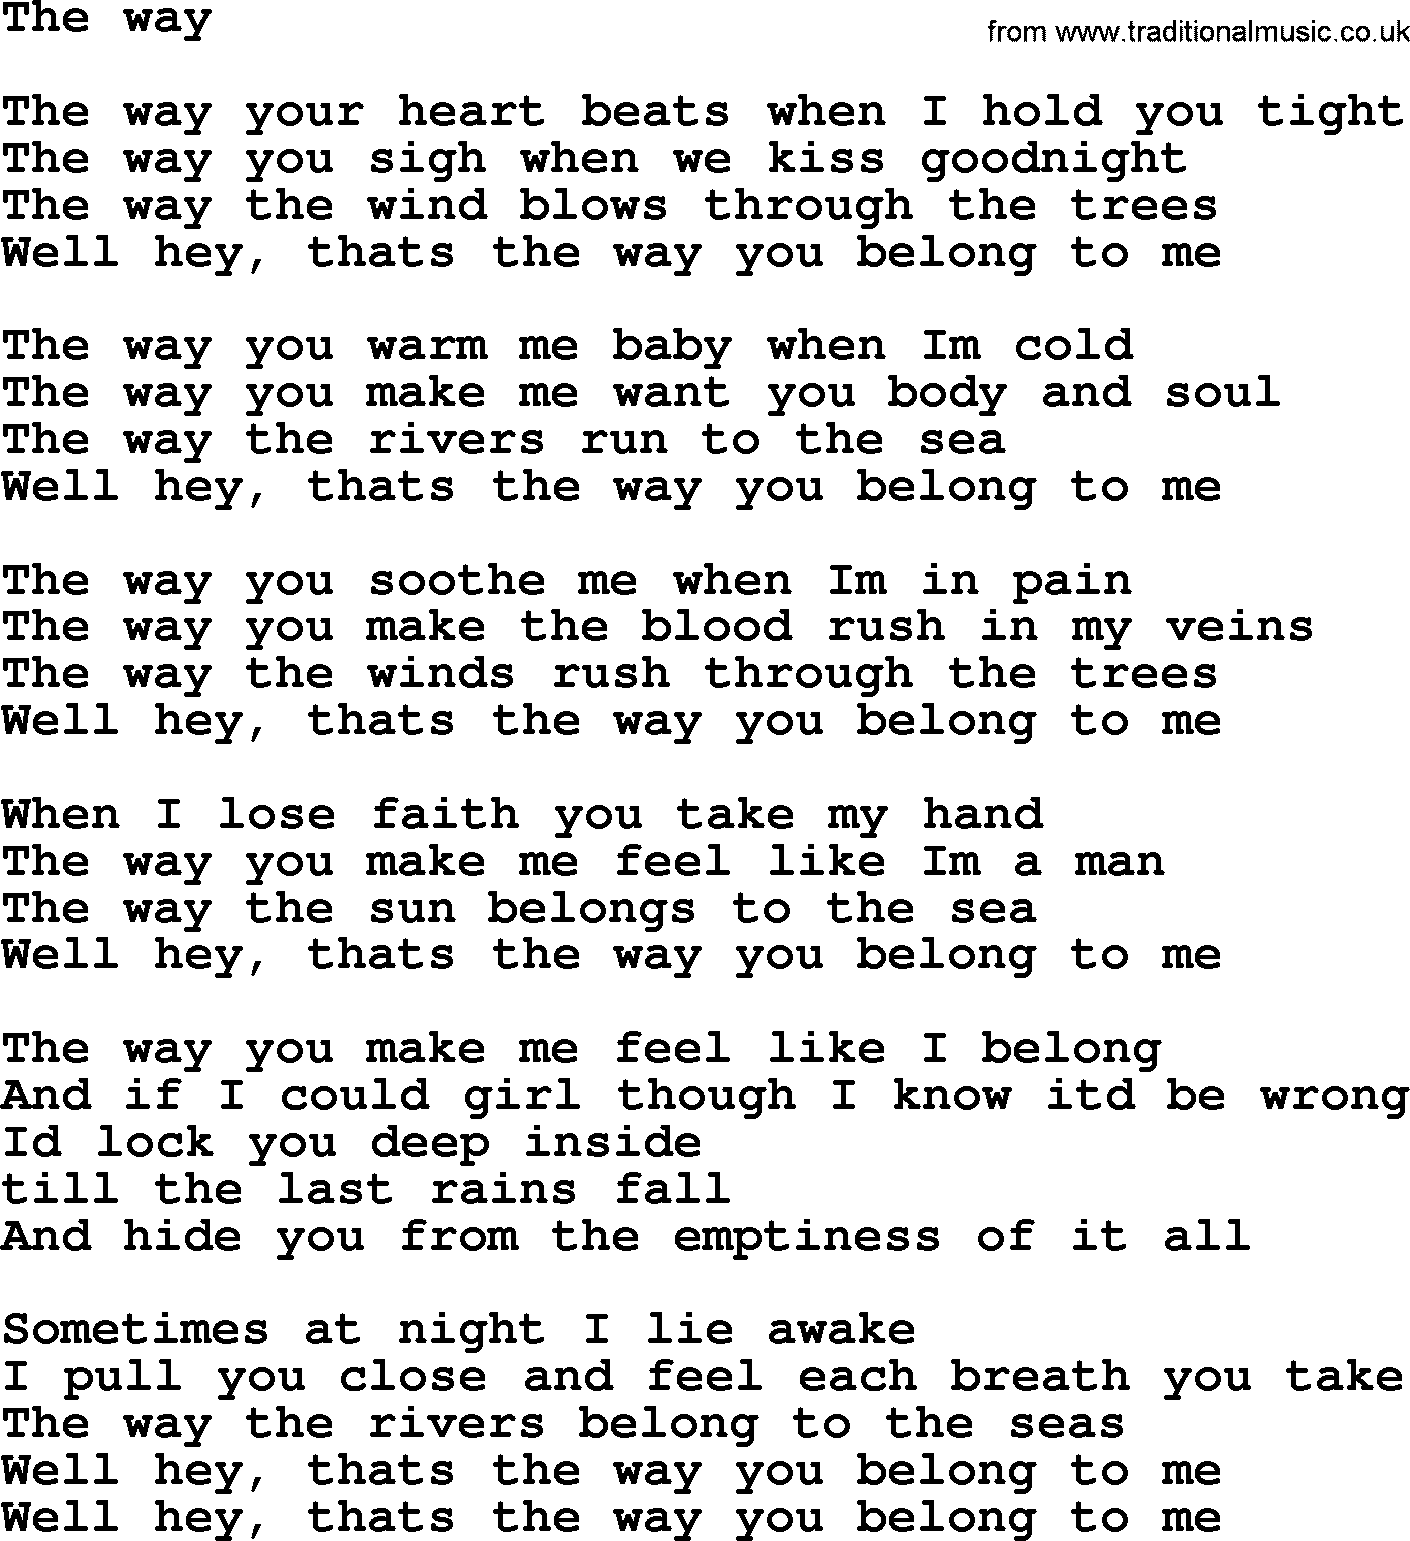 Bruce Springsteen song: The Way lyrics